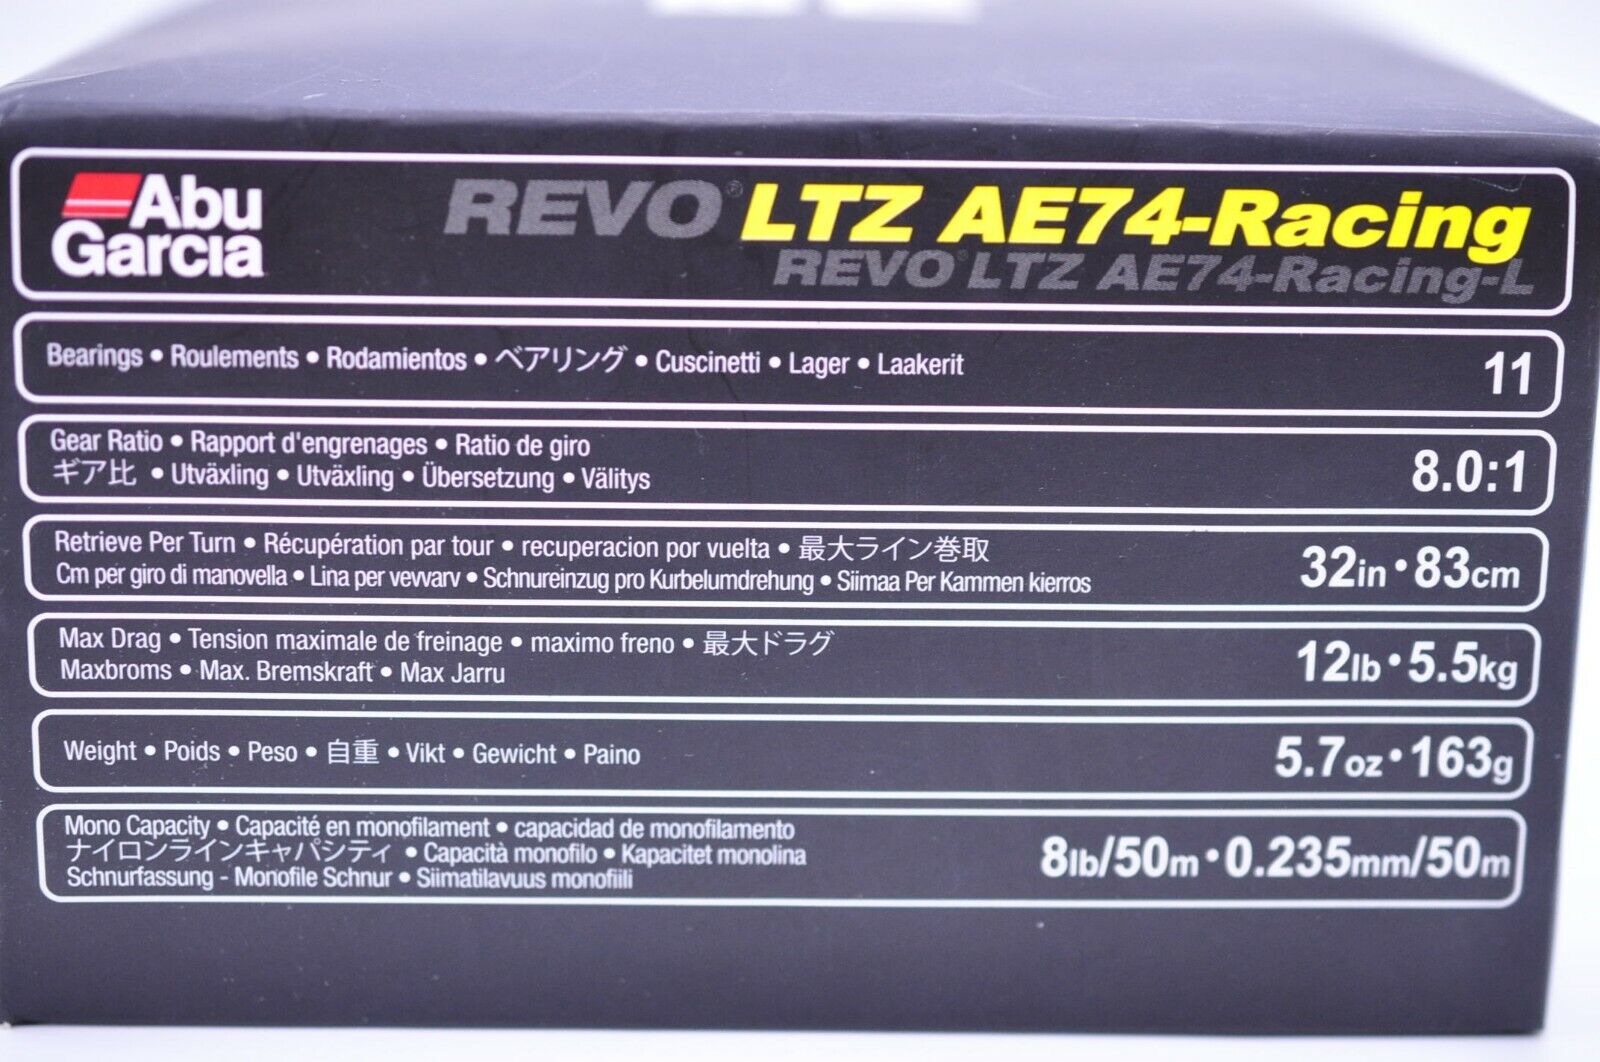 Abu Garcia Revo LTZ Ae74-racing Left 8.0 1 Casting Reel F/s From Japan 303  for sale online | eBay